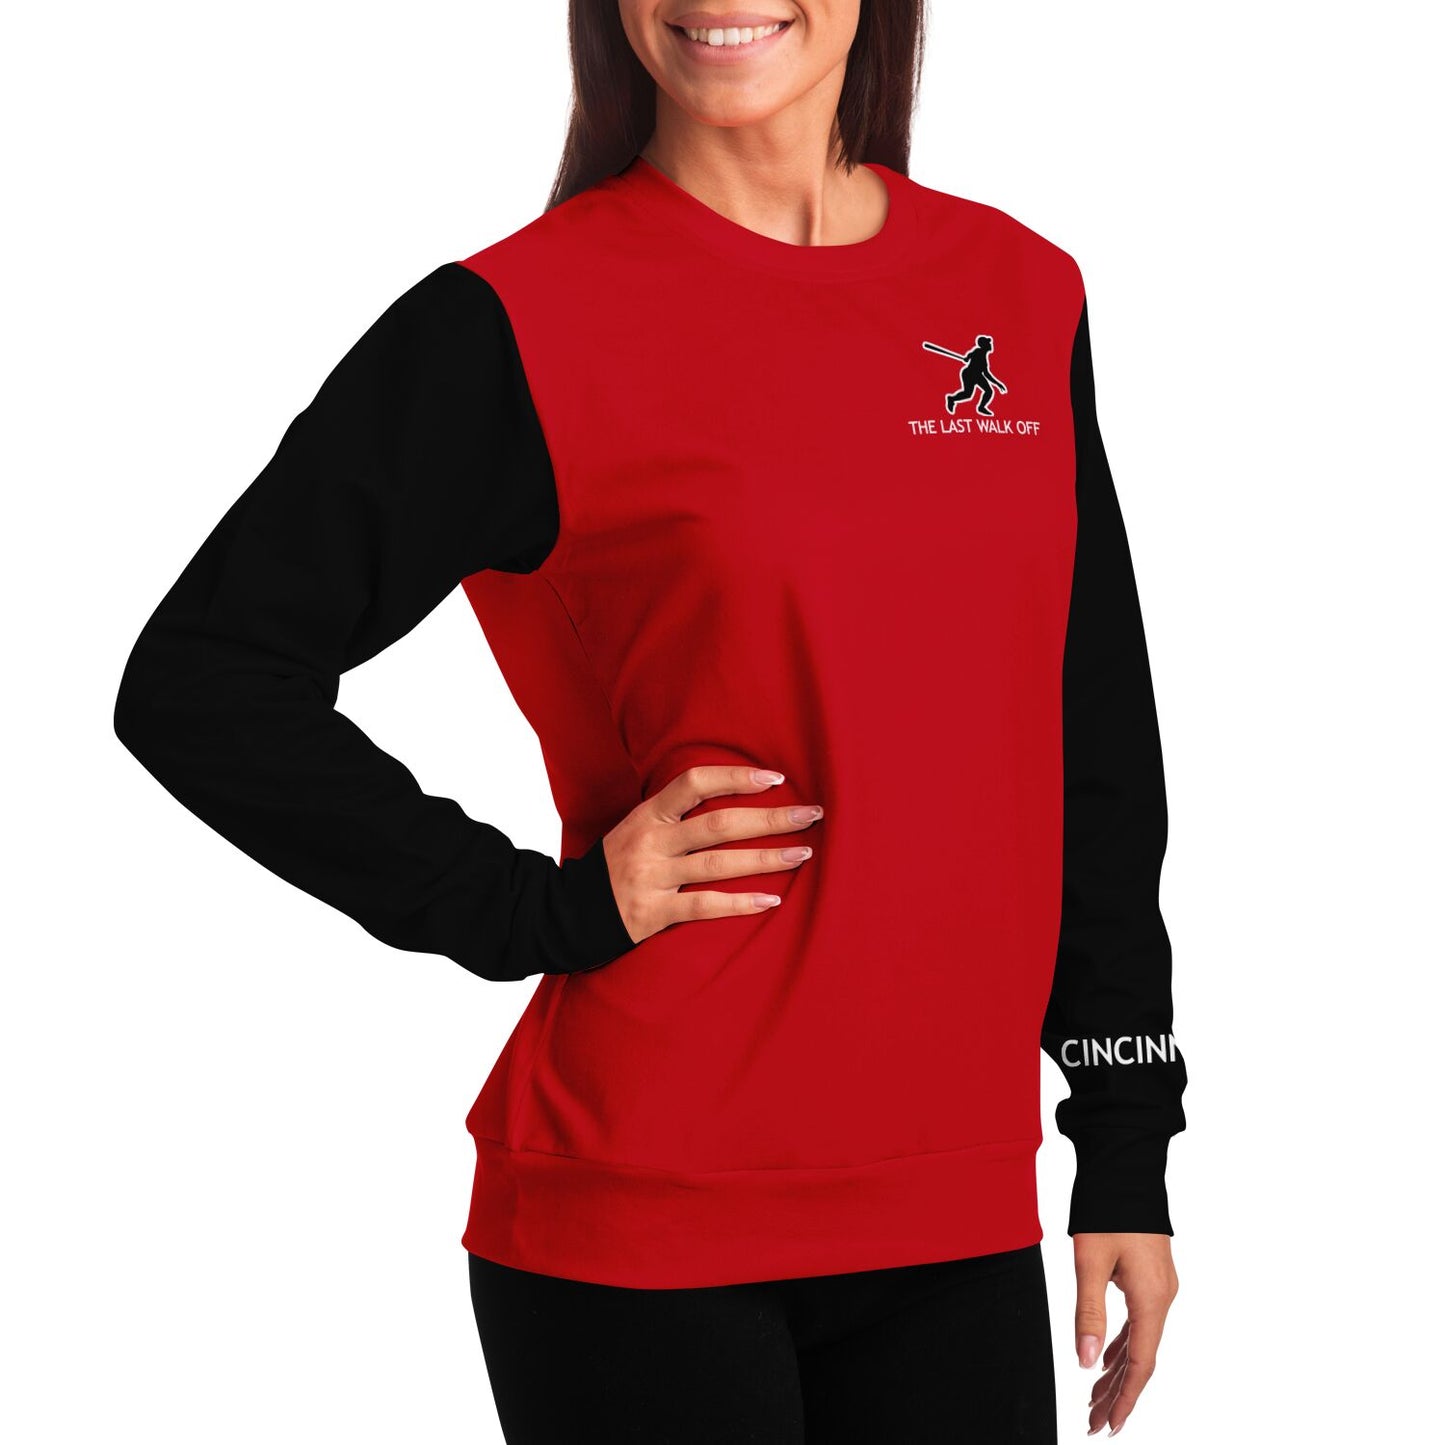 Cincinnati Red Black Long Sleeve Shirt